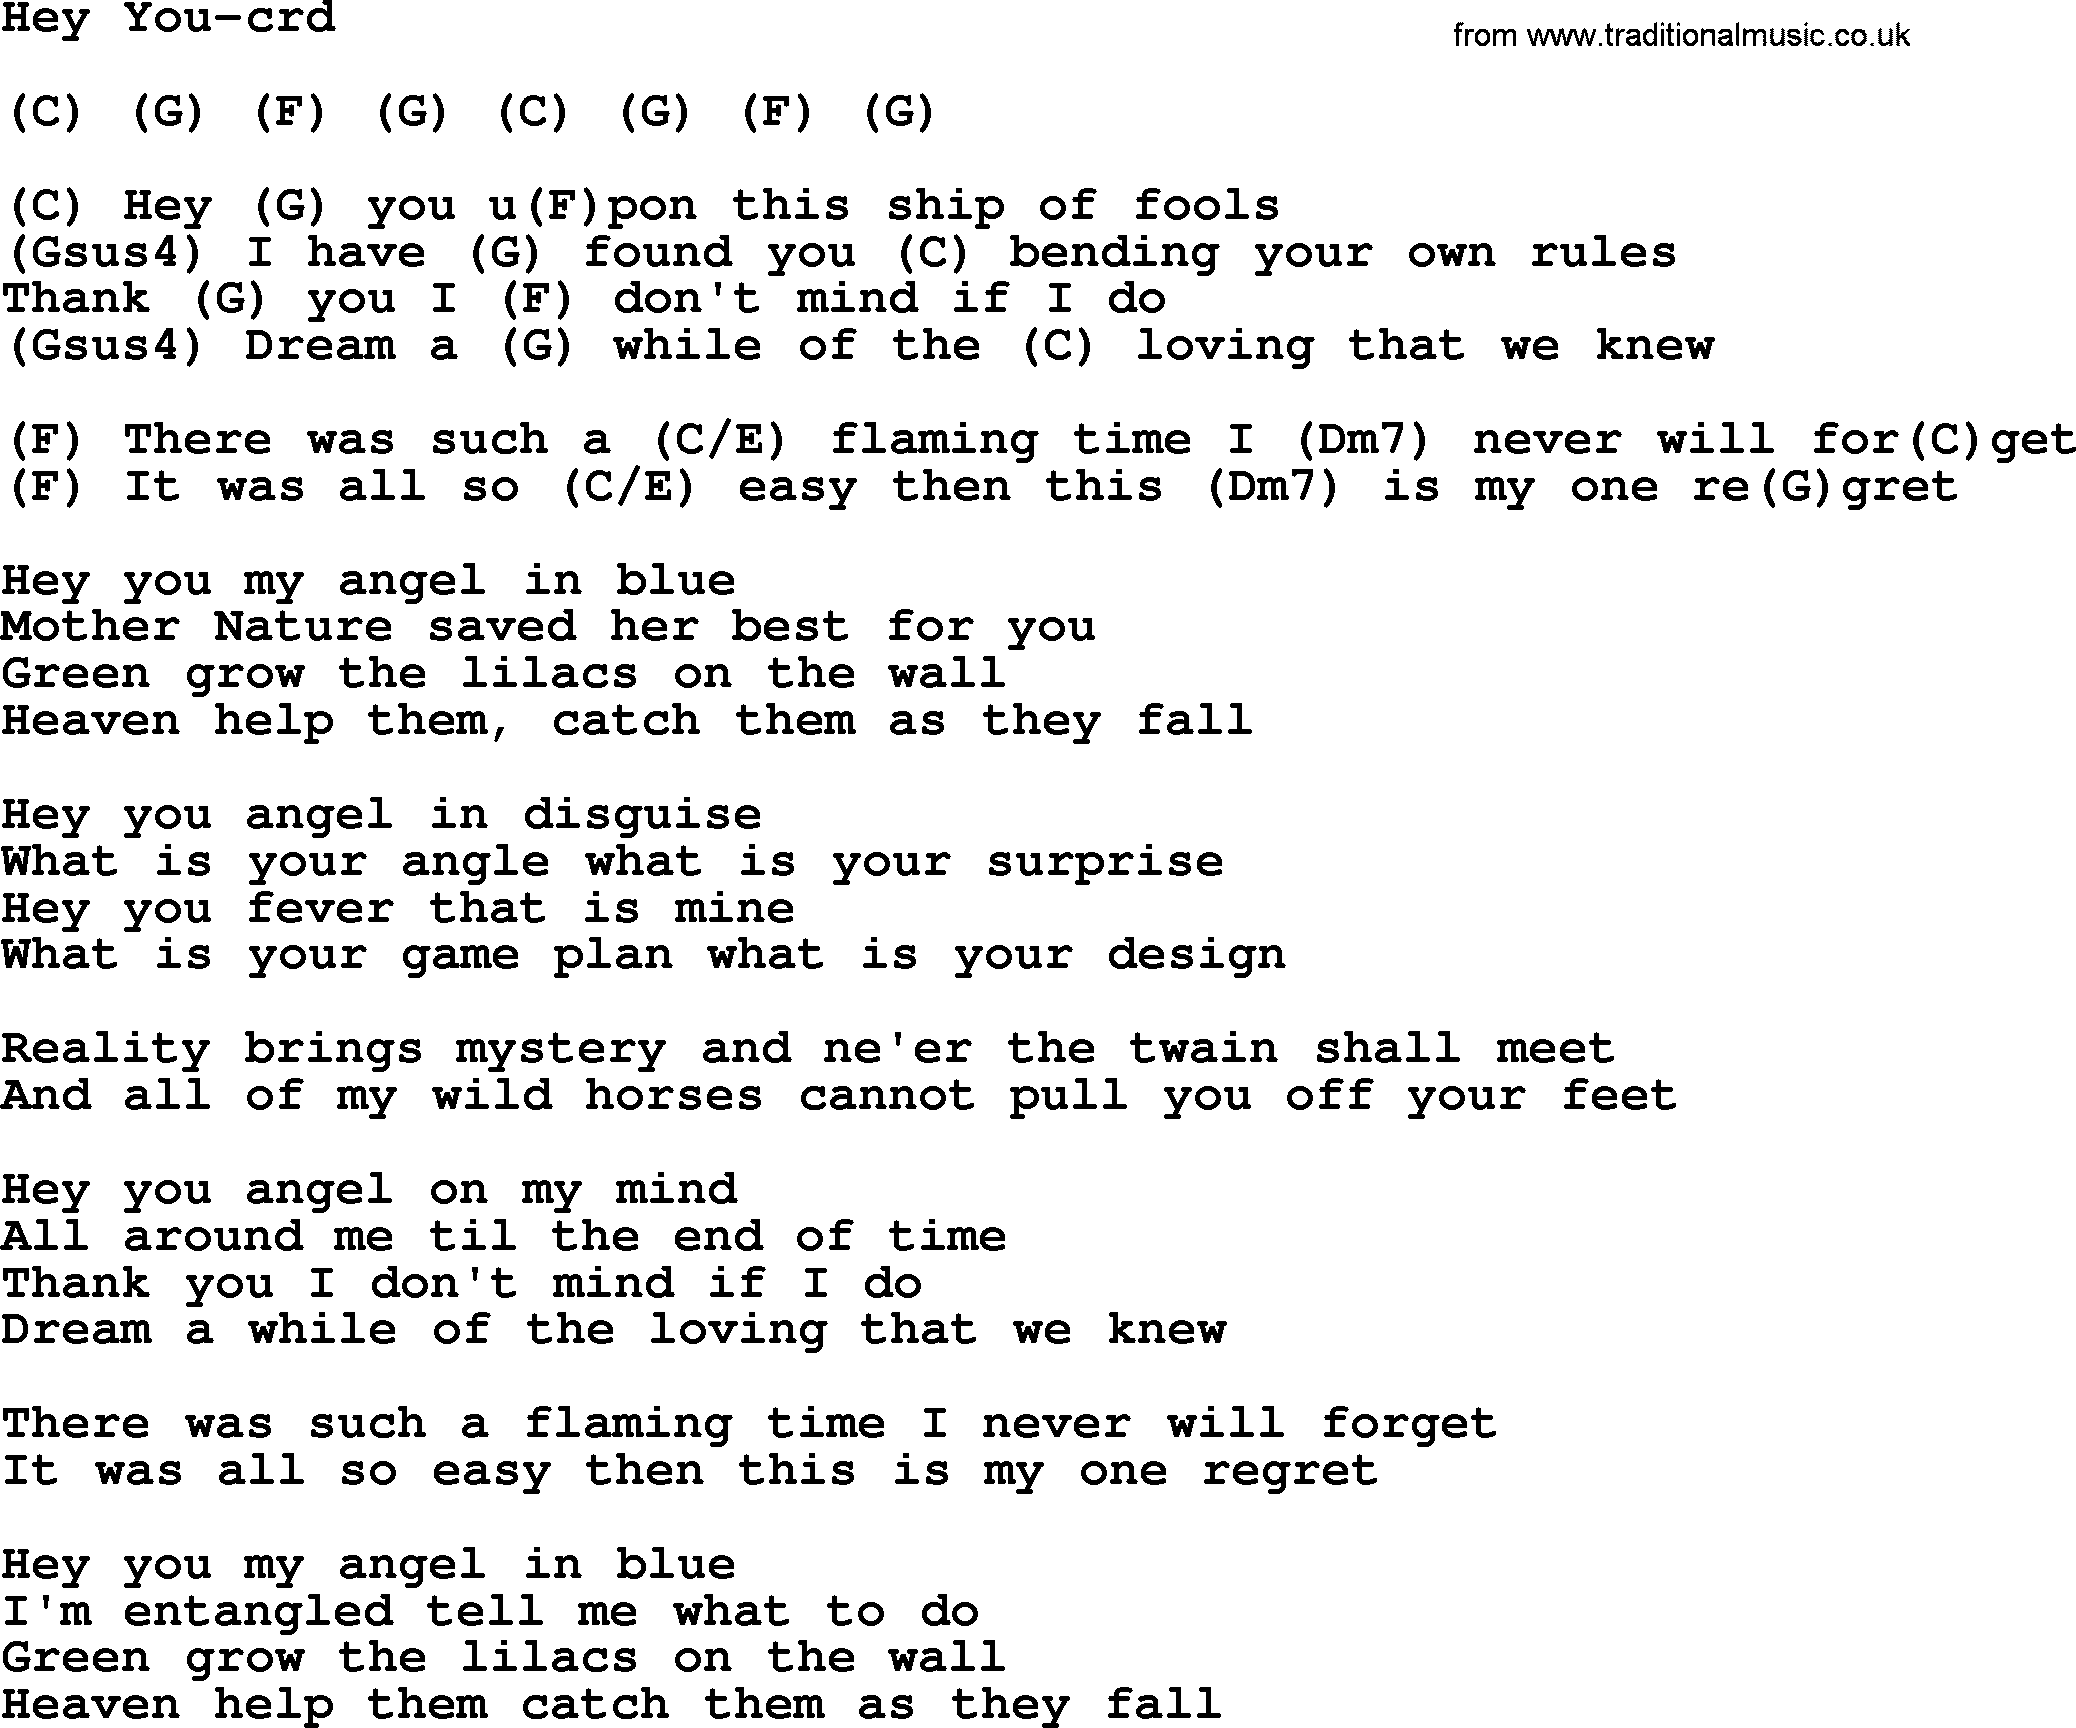 Gordon Lightfoot song Hey You, lyrics and chords